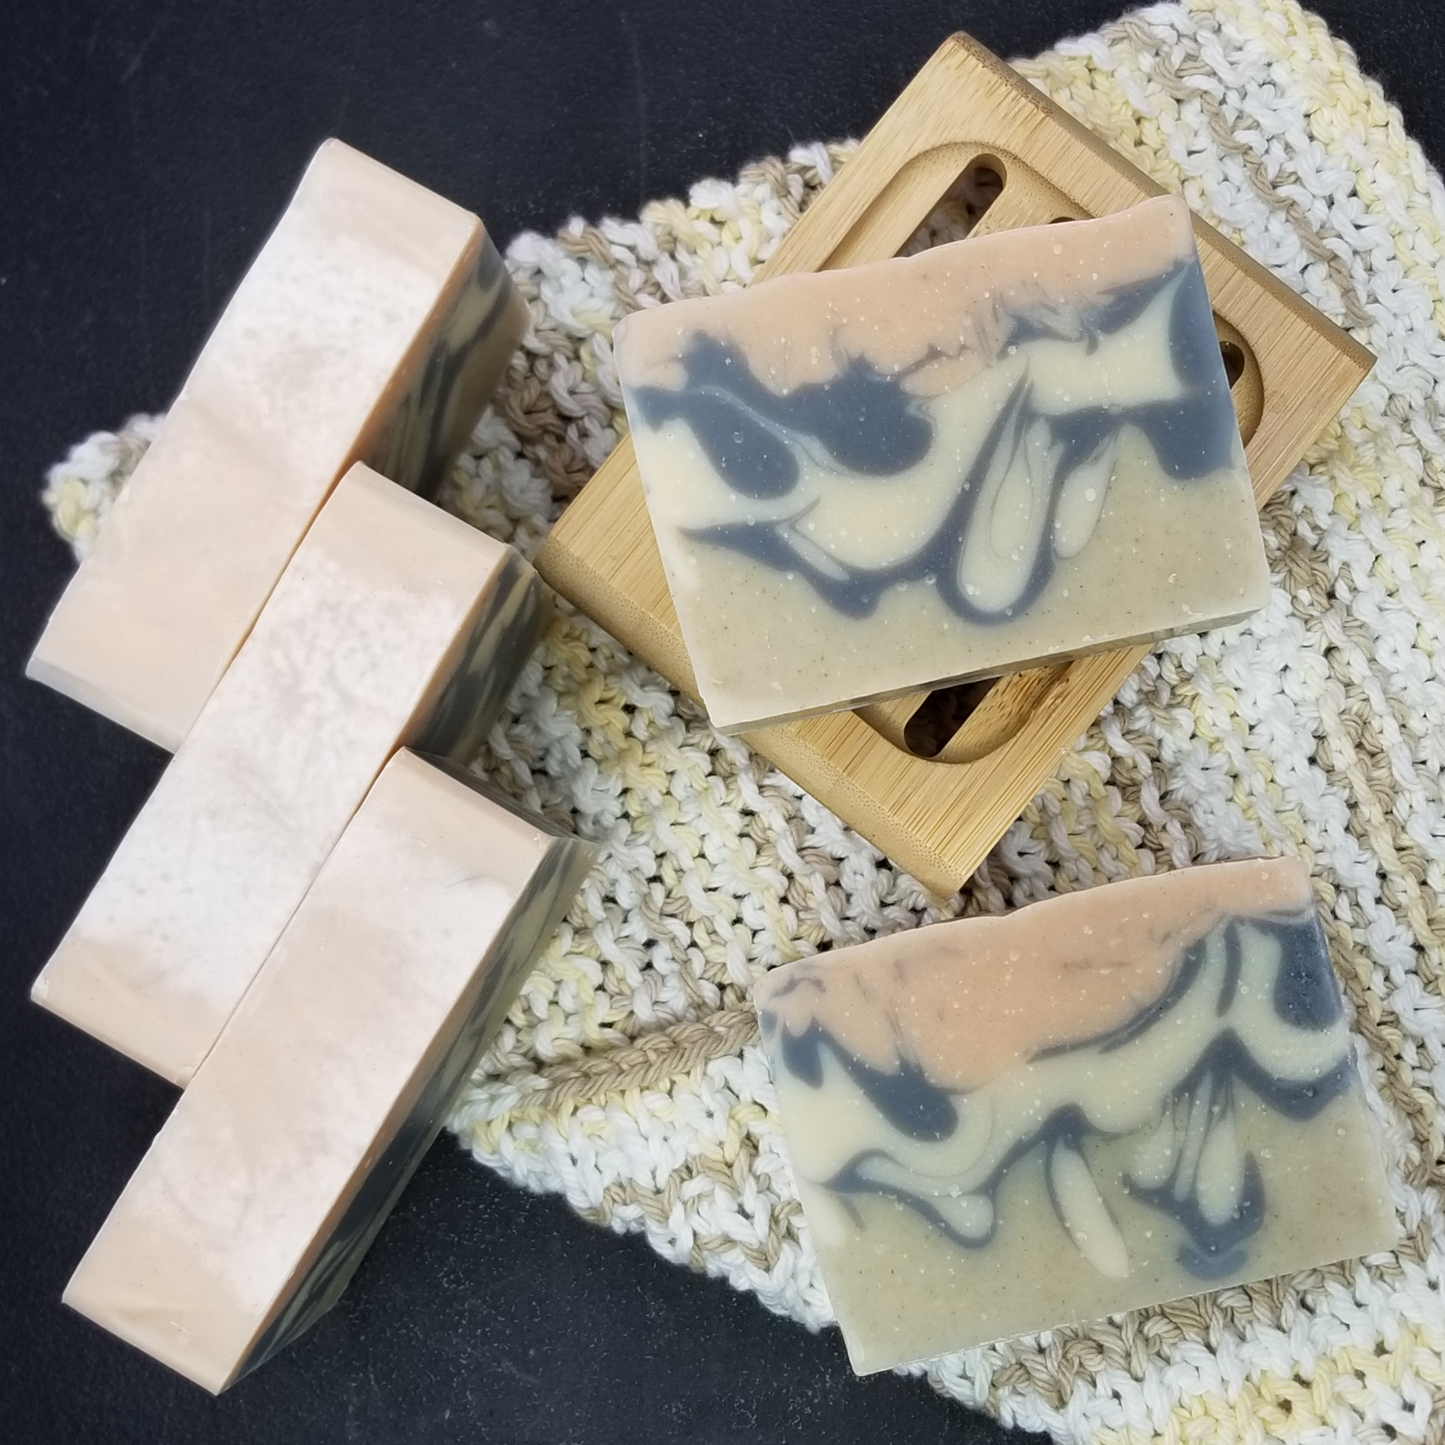 Charcoal & Tea Tree - Artisan Soap with Goat Milk